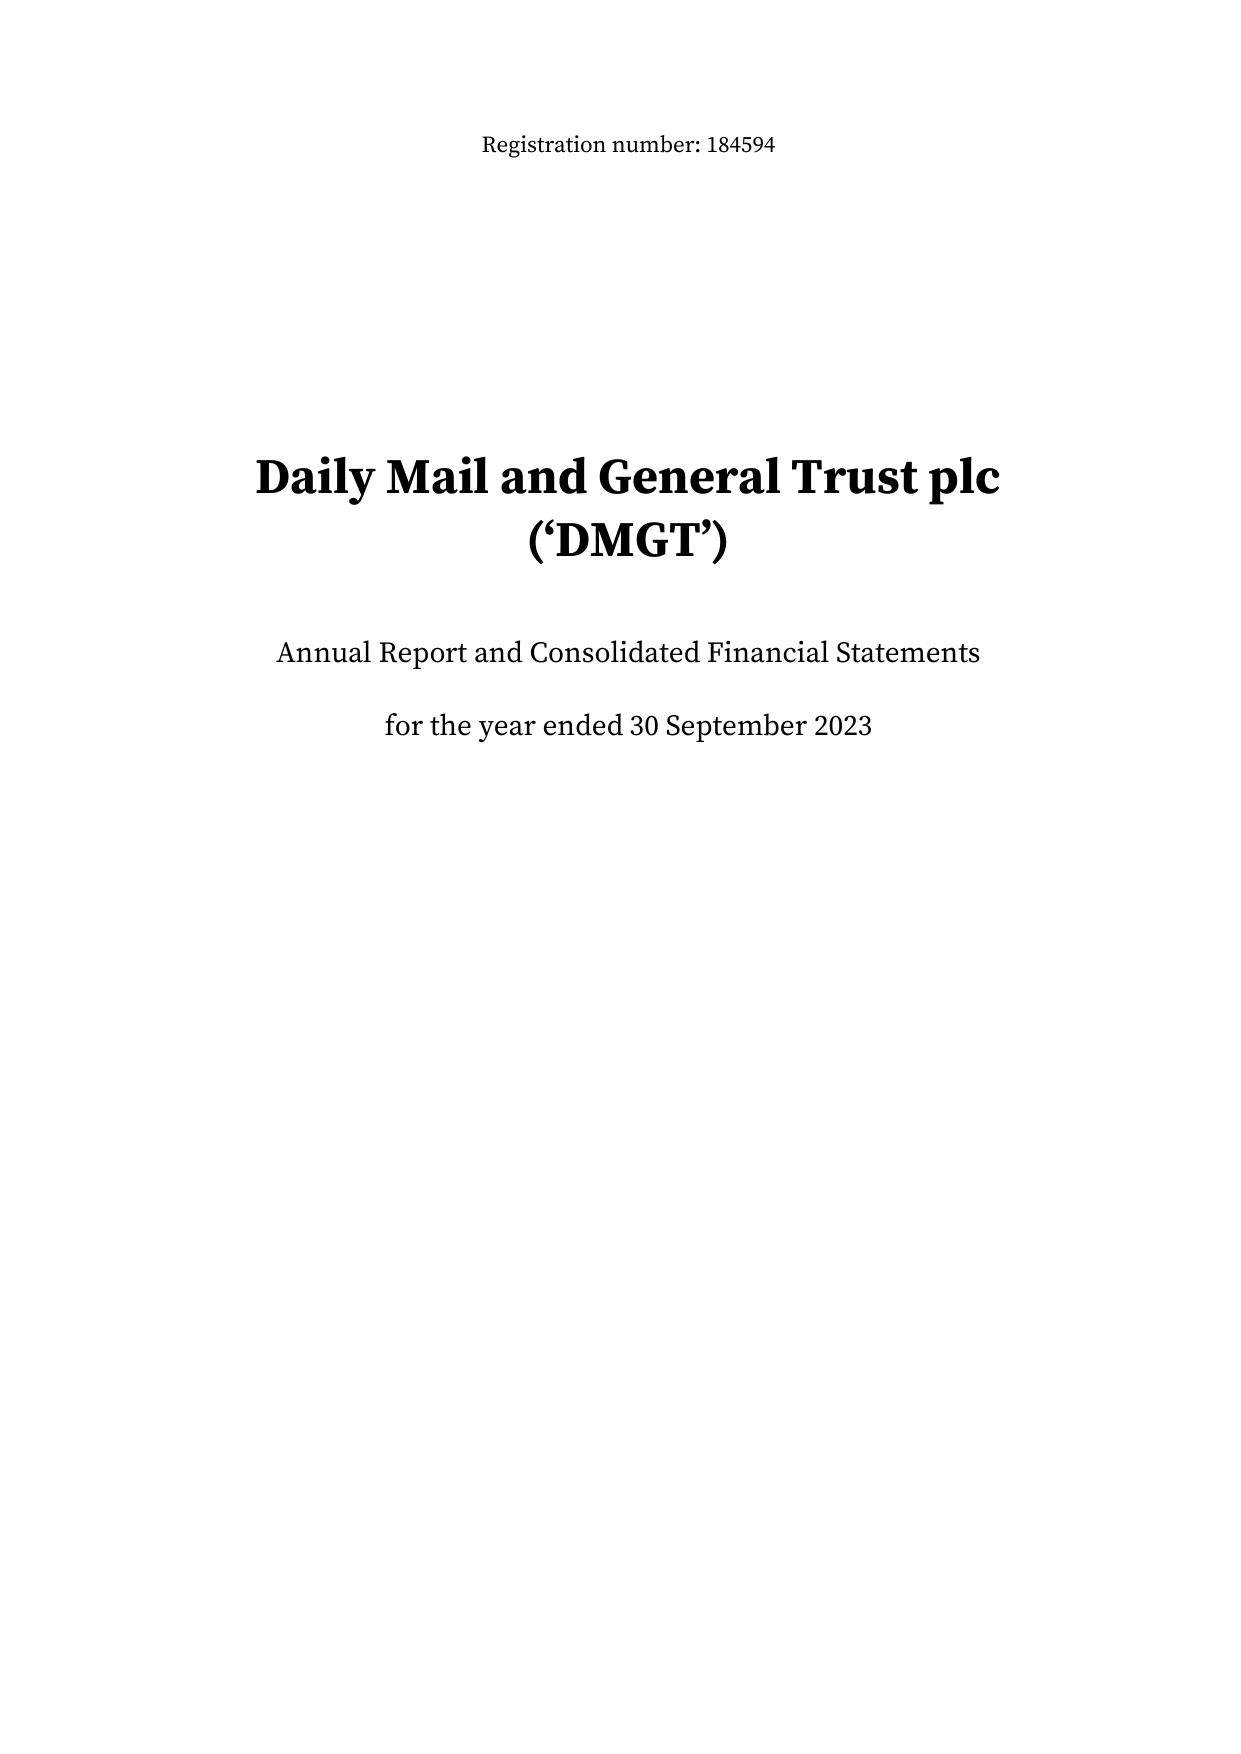 DMGT 2023 Annual Report